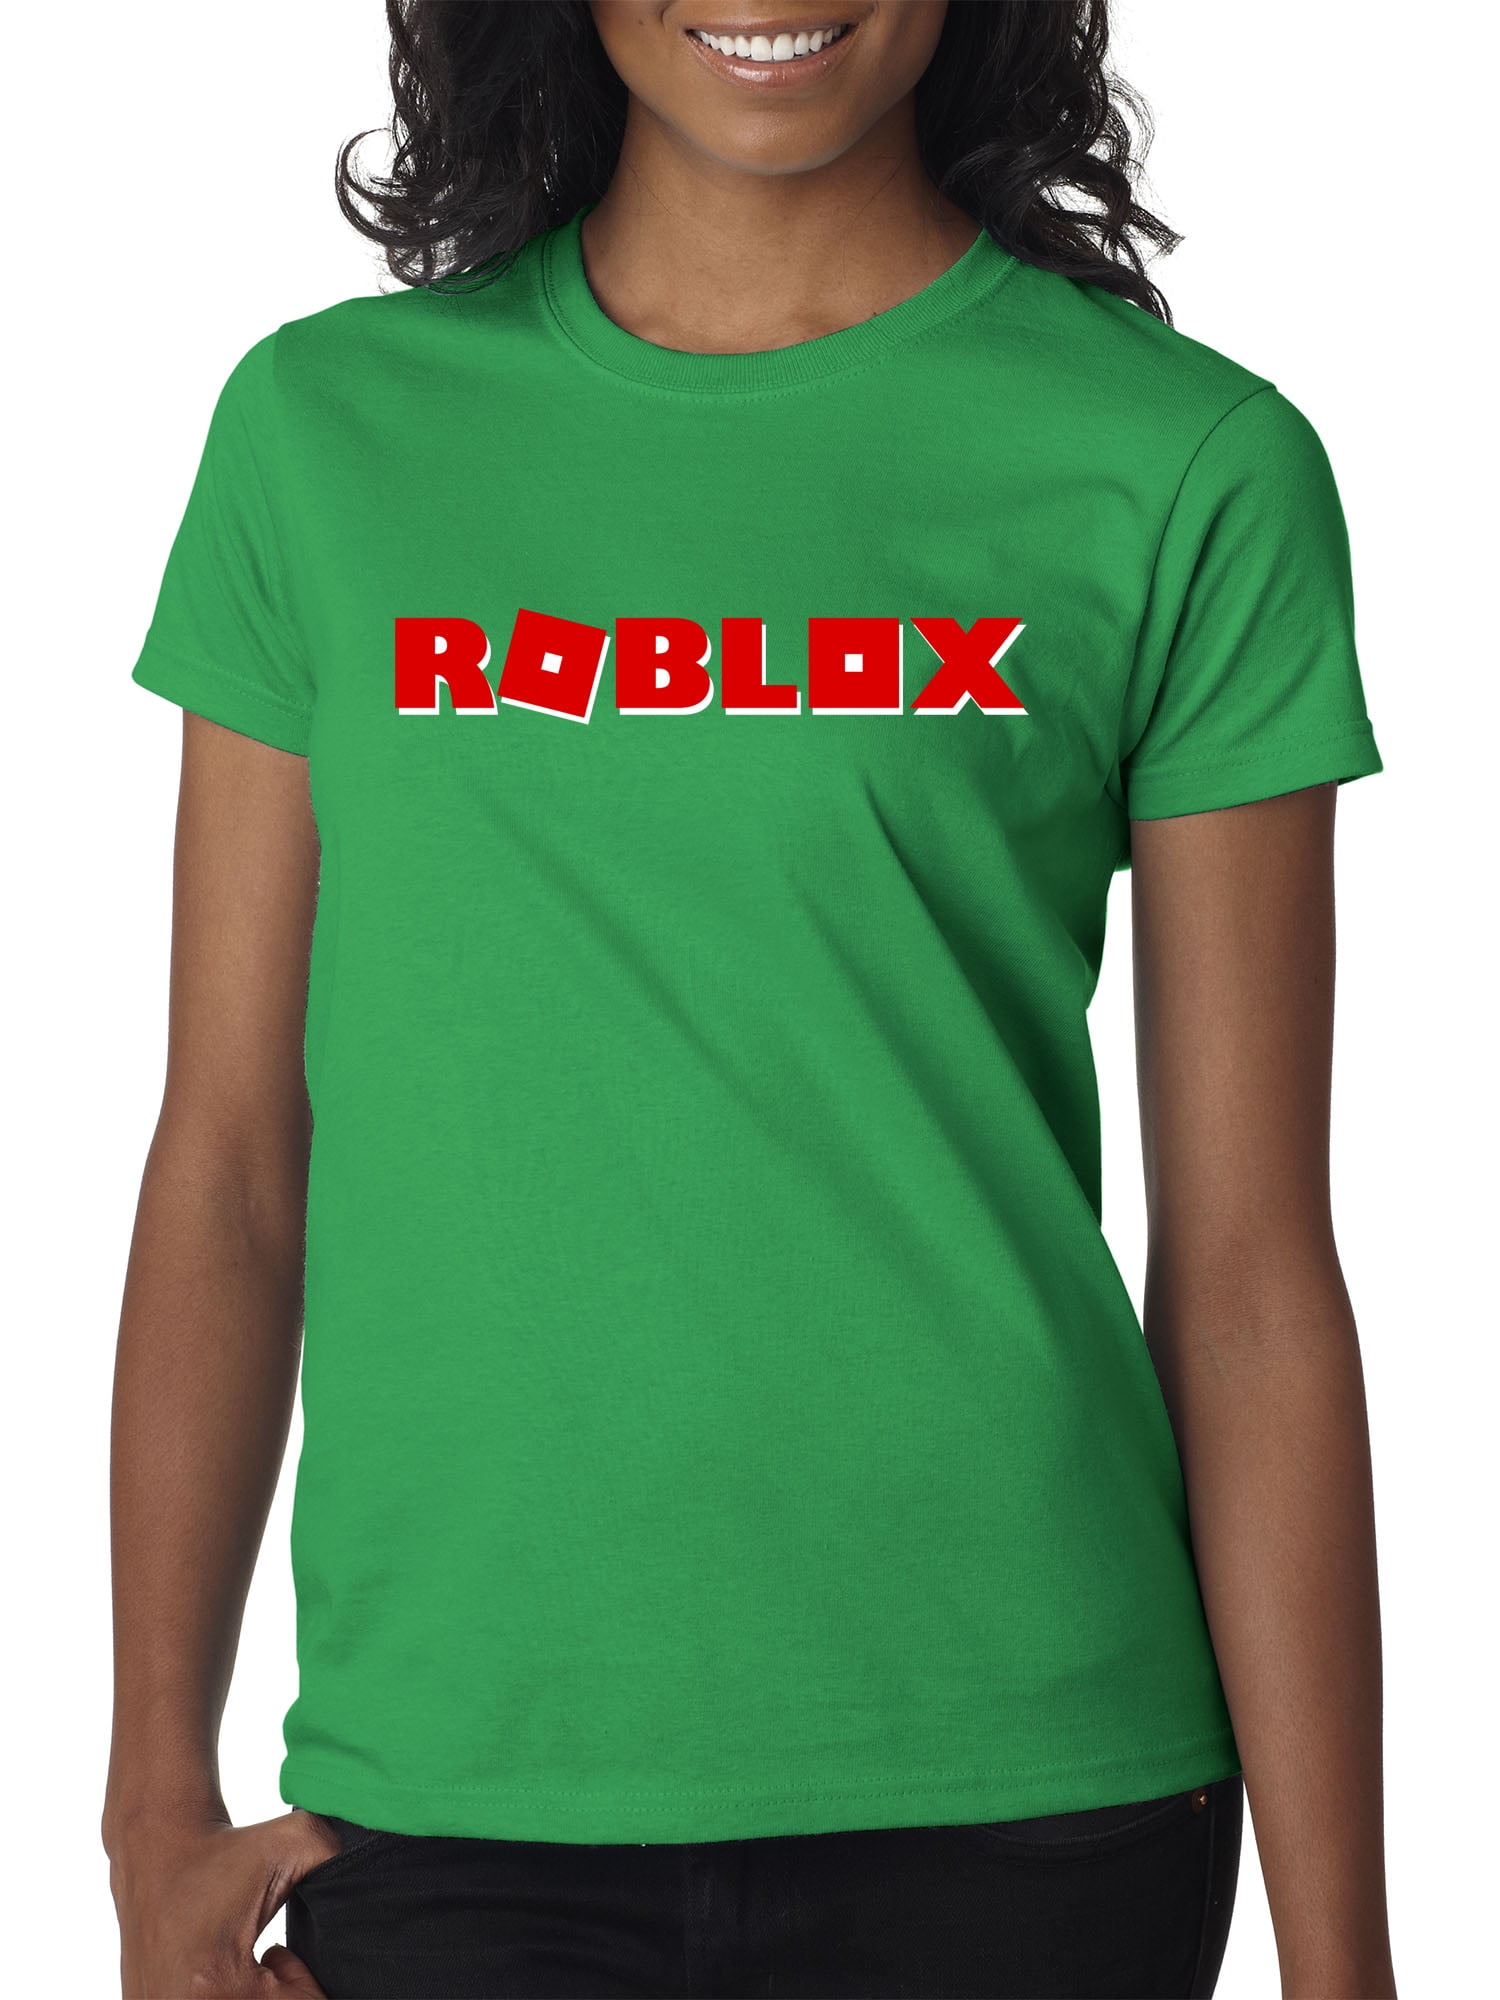 New Way New Way 922 Women S T Shirt Roblox Logo Game Filled Large Kelly Green Walmart Com - gucci logo for roblox t shirt